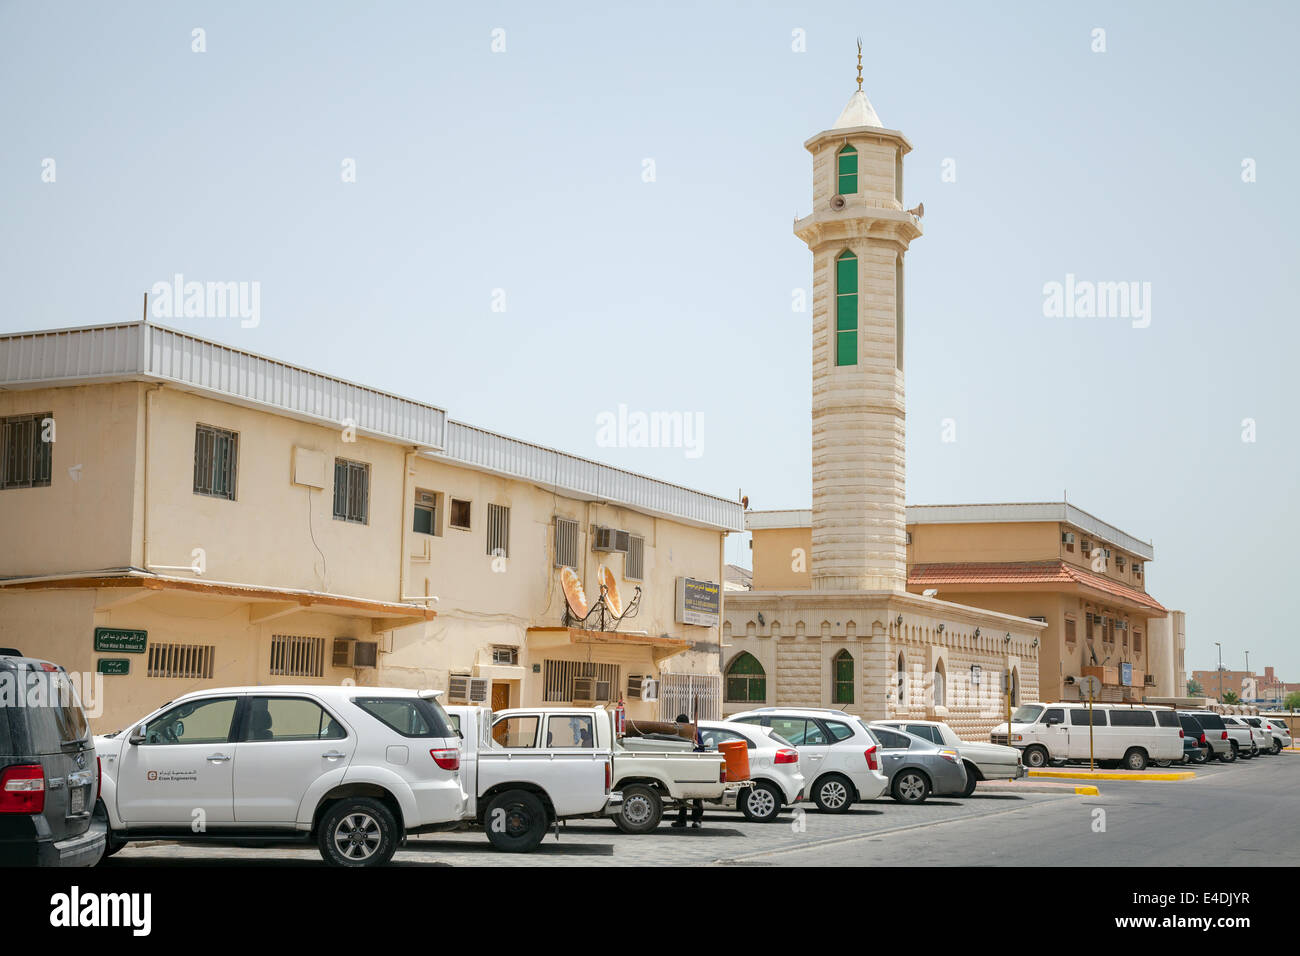 RAS TANURA, Saudi-Arabien - 10. Mai 2014: Streetview mit Autos und Moschee Minarett, Saudi Arabien Stockfoto